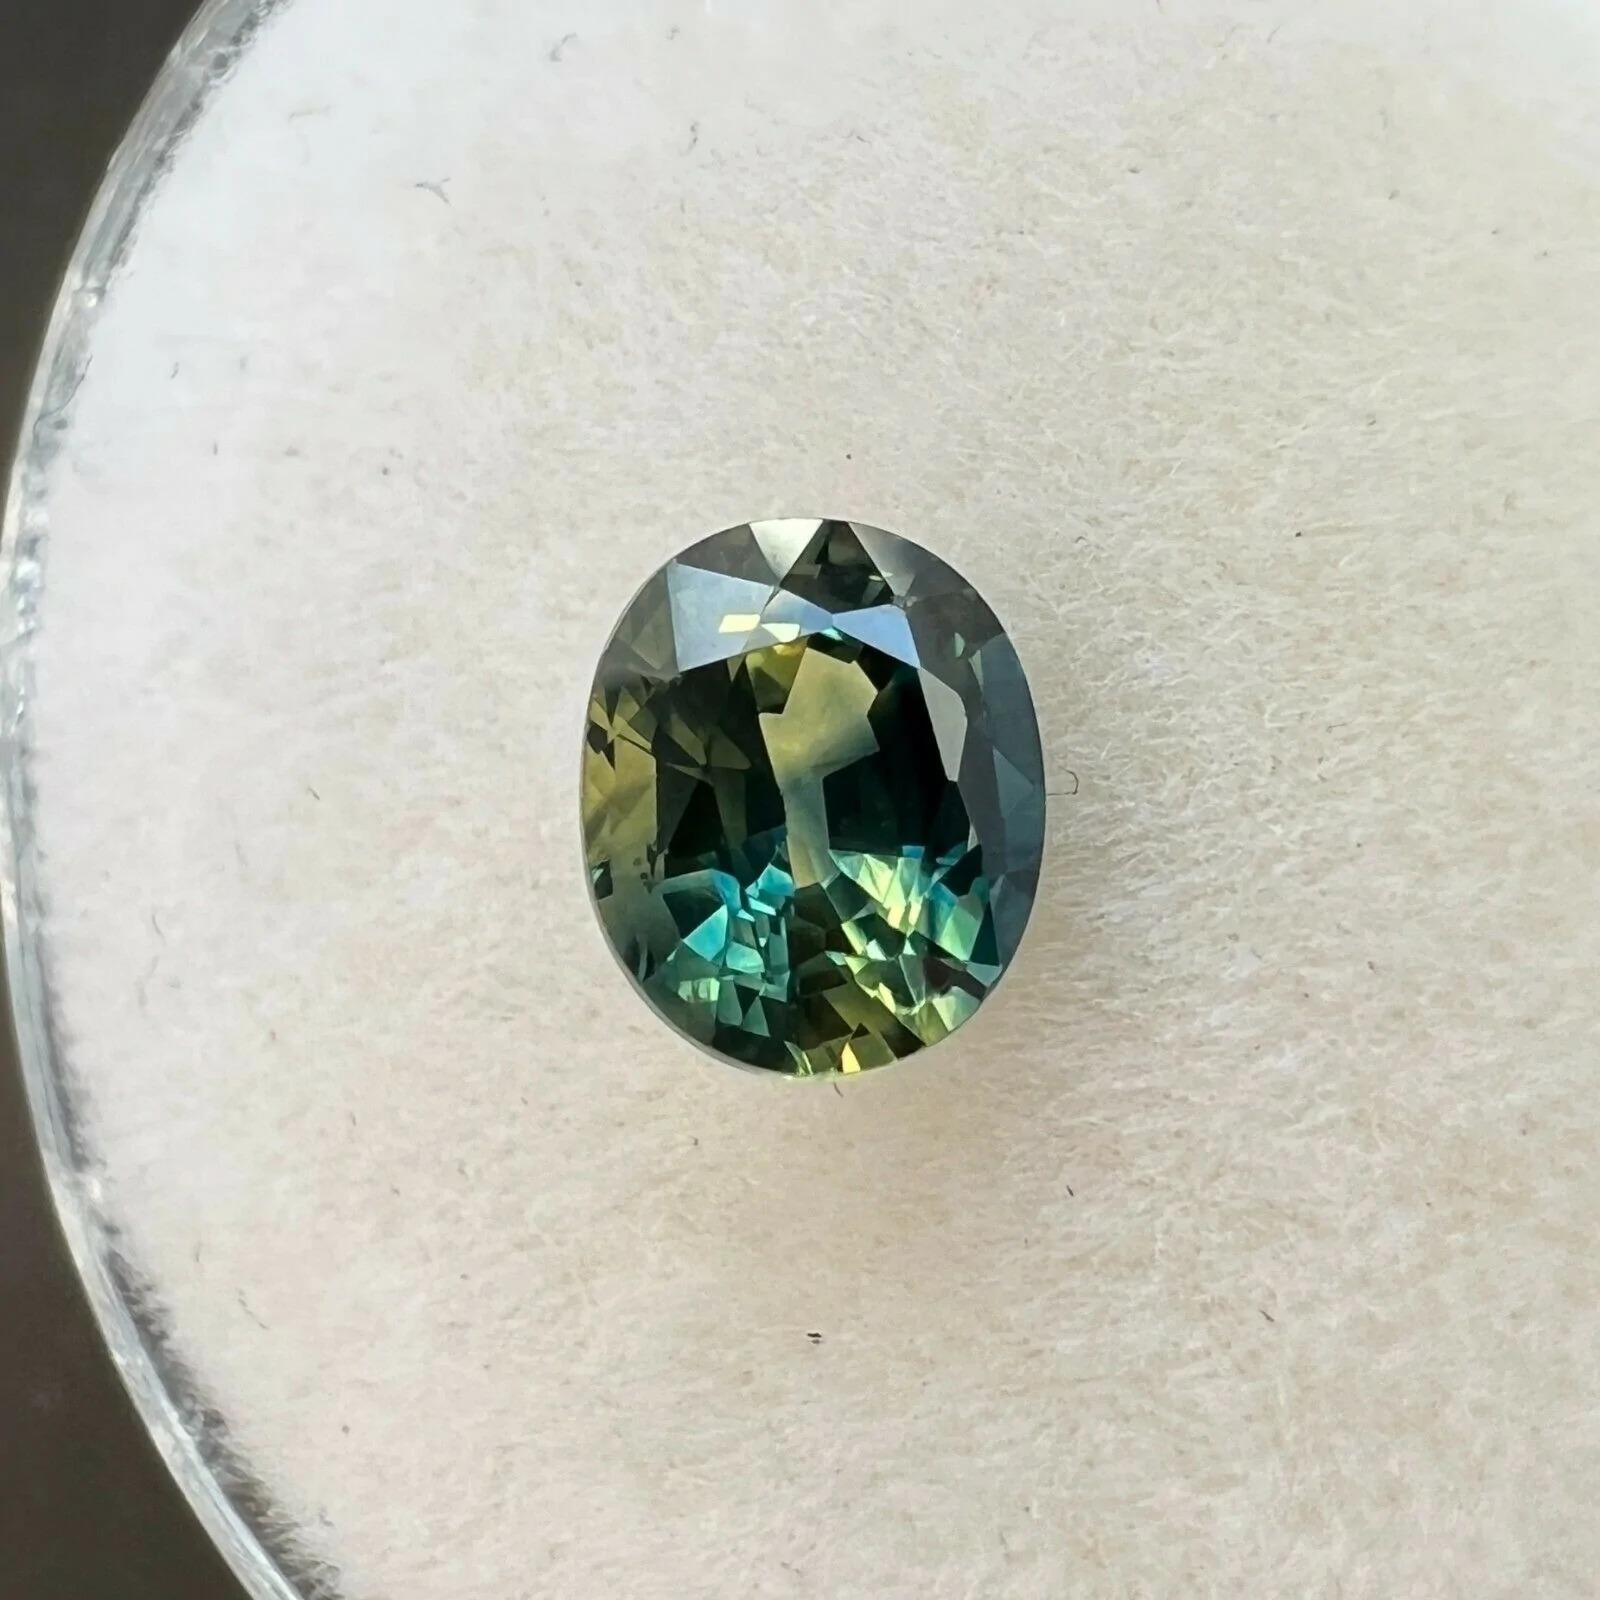 Taille ovale Saphir australien bleu vert sarcelle jaune taille ovale de 1,36 carat, pierre précieuse rare en vente